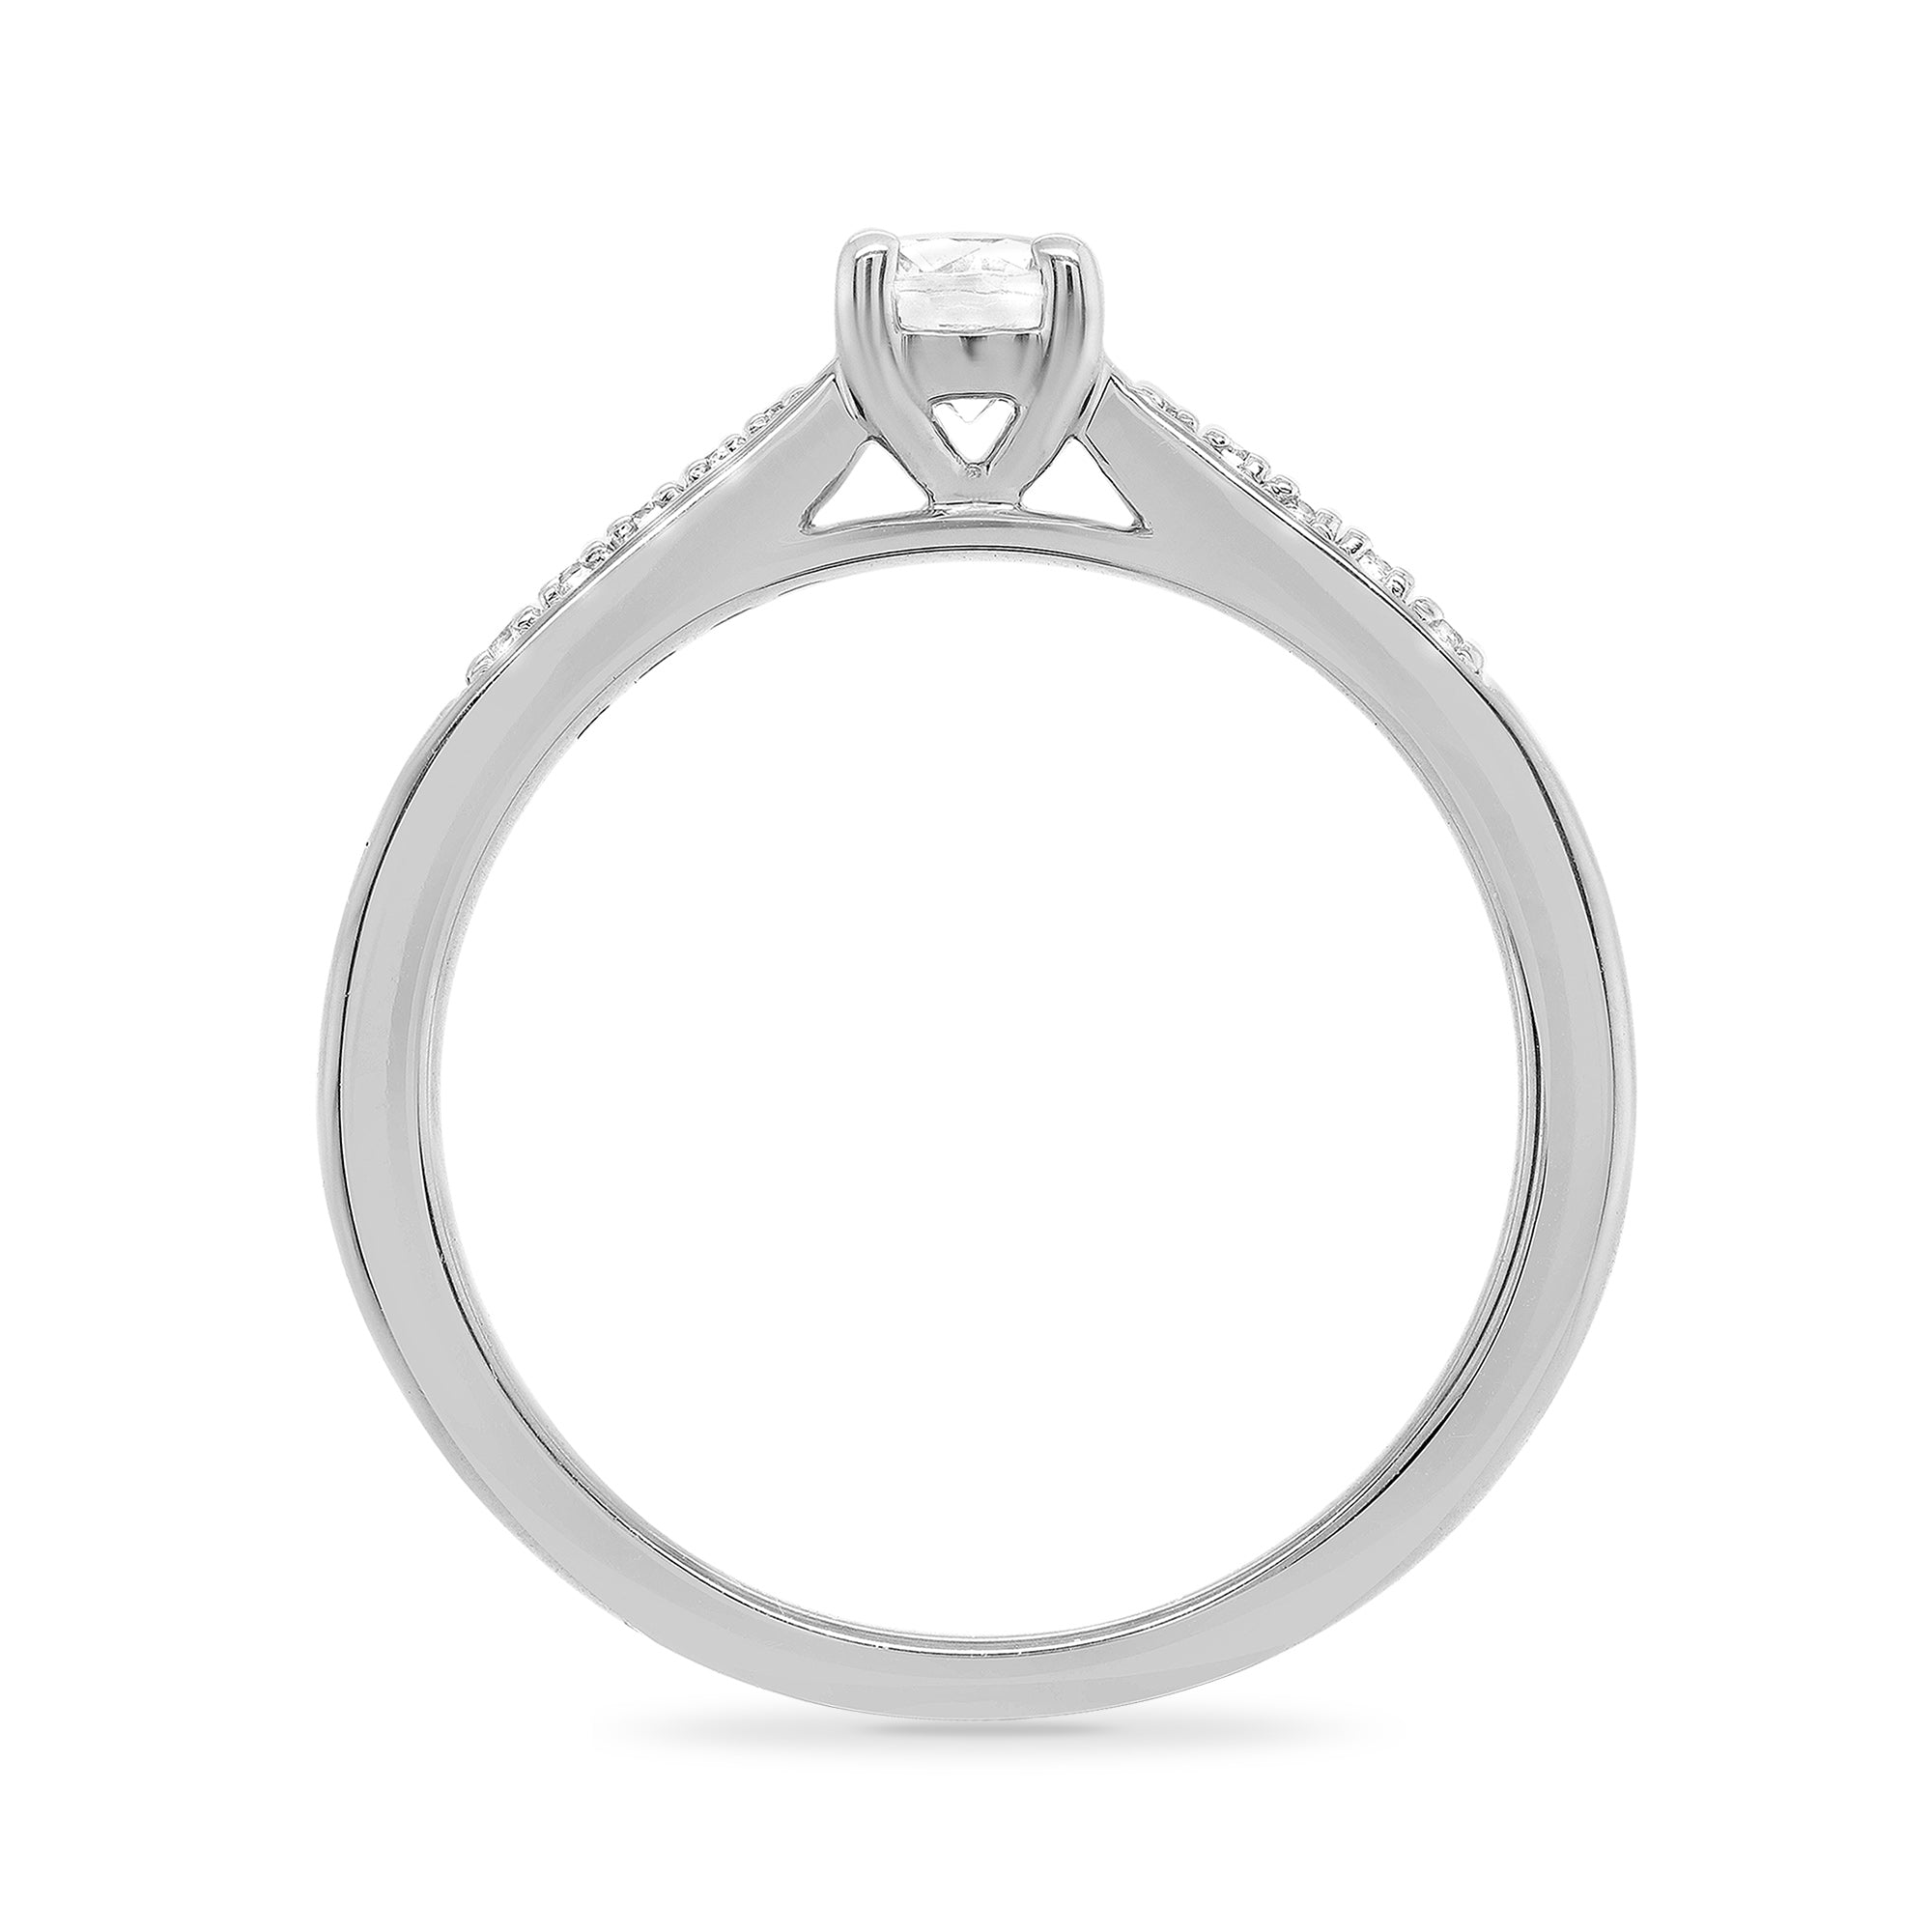 9ct white gold single stone diamond ring with diamond set shoulders 0.33ct